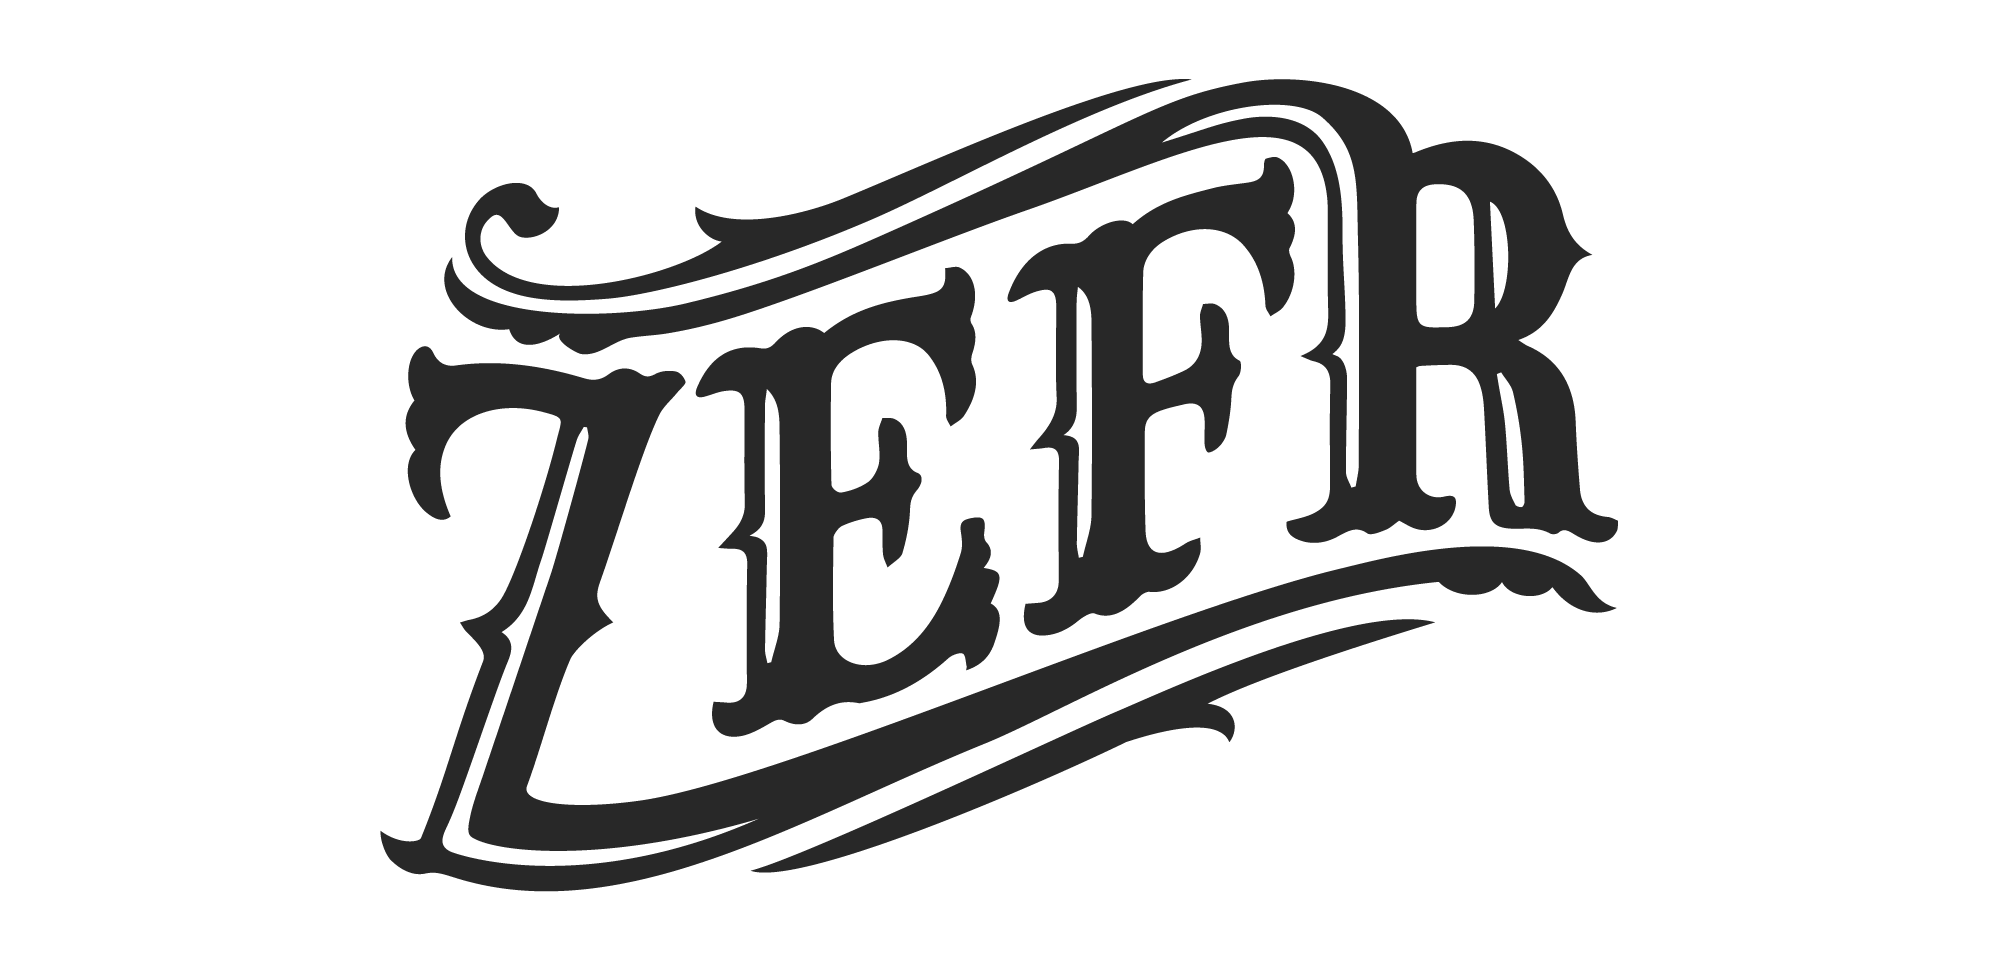 Zefr script logo - dark charcoal grey